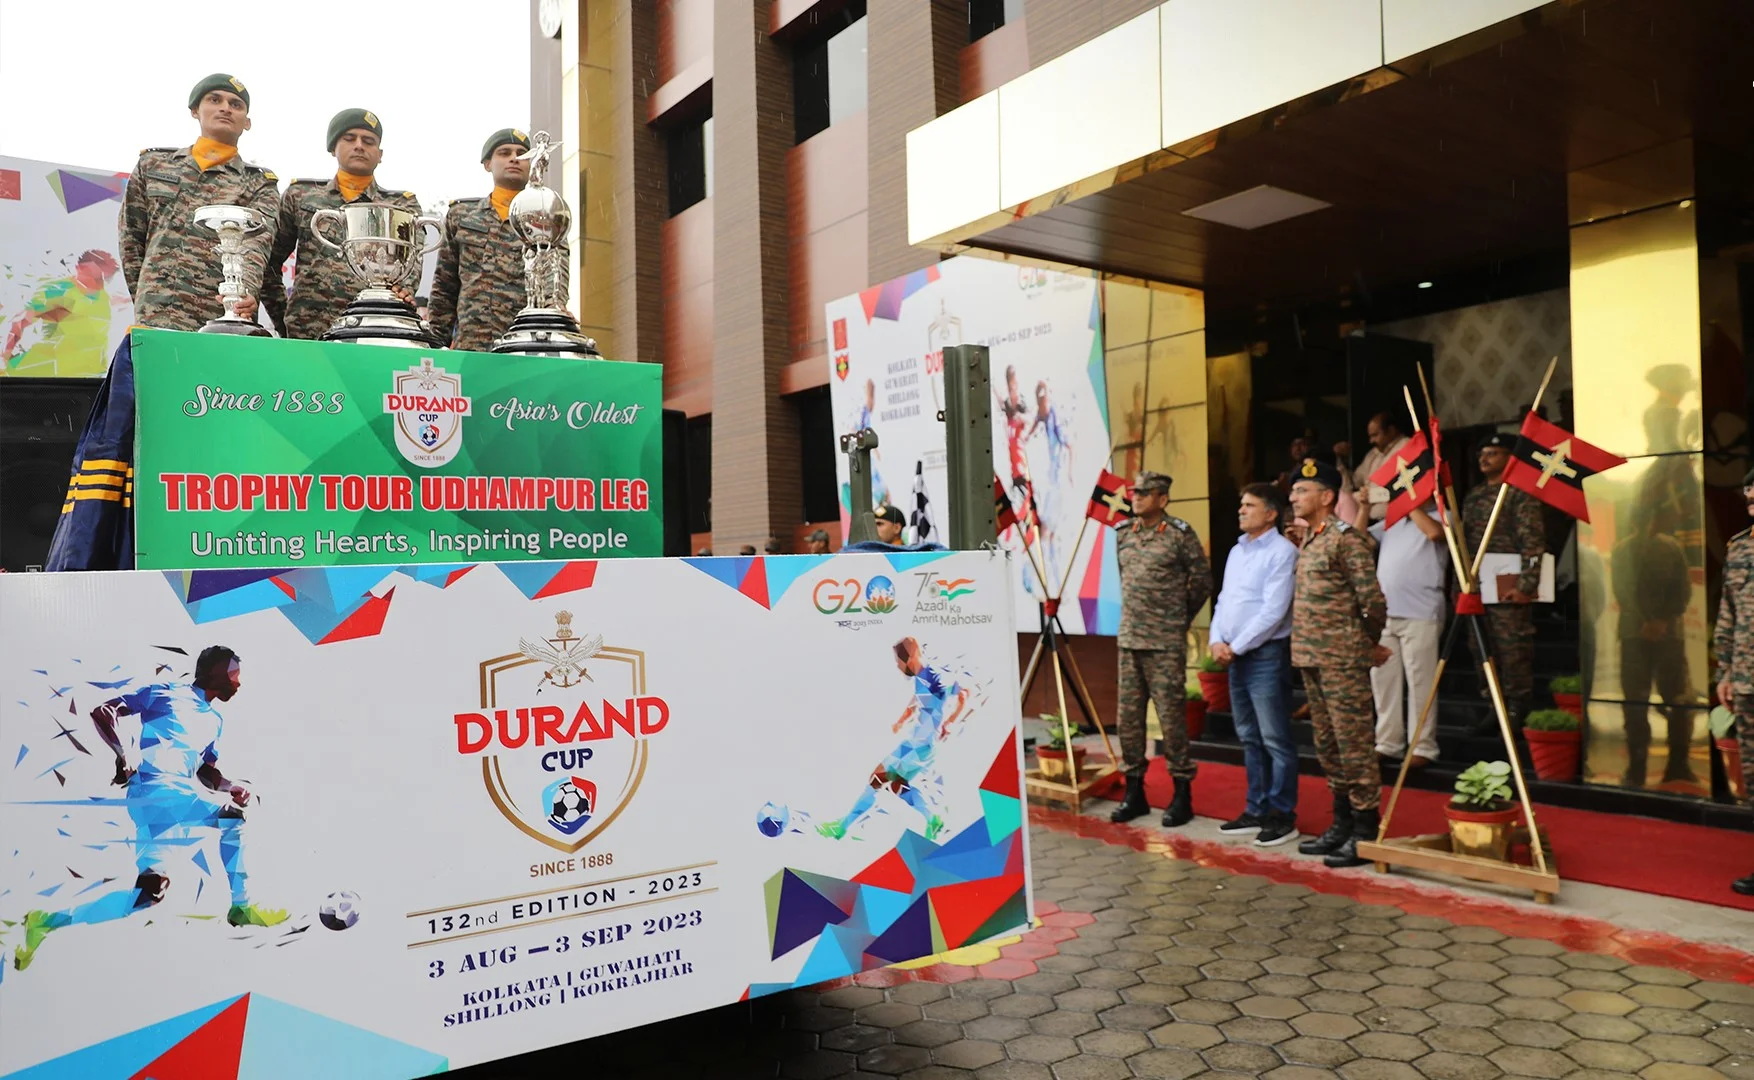 Durand Cup trophy tour 2023